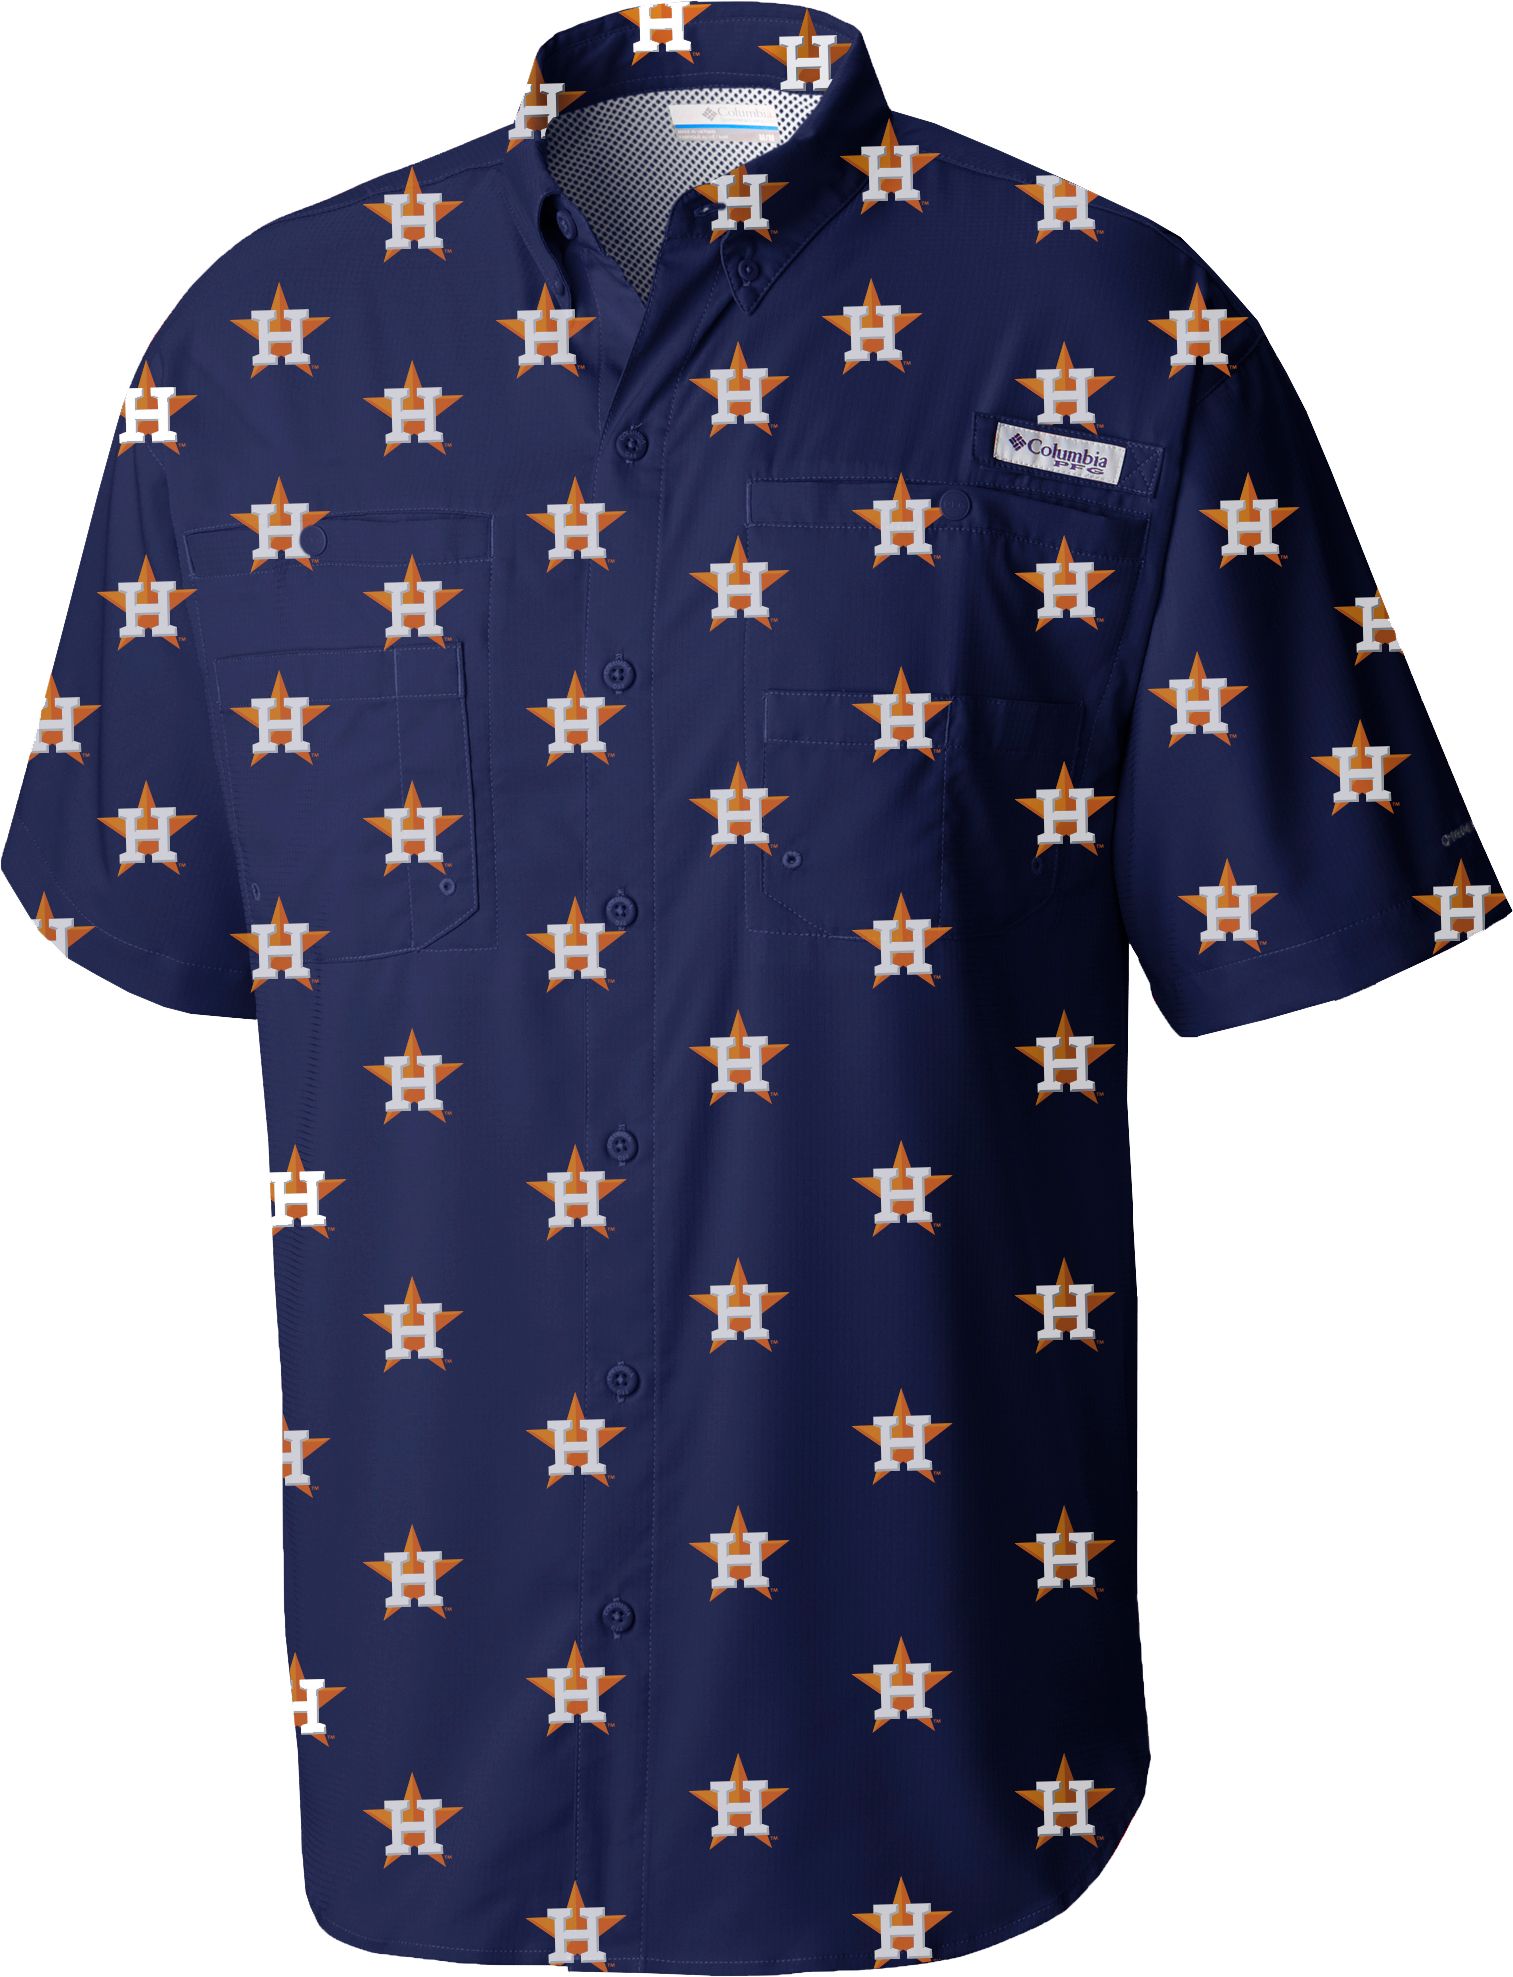 astros columbia shirt